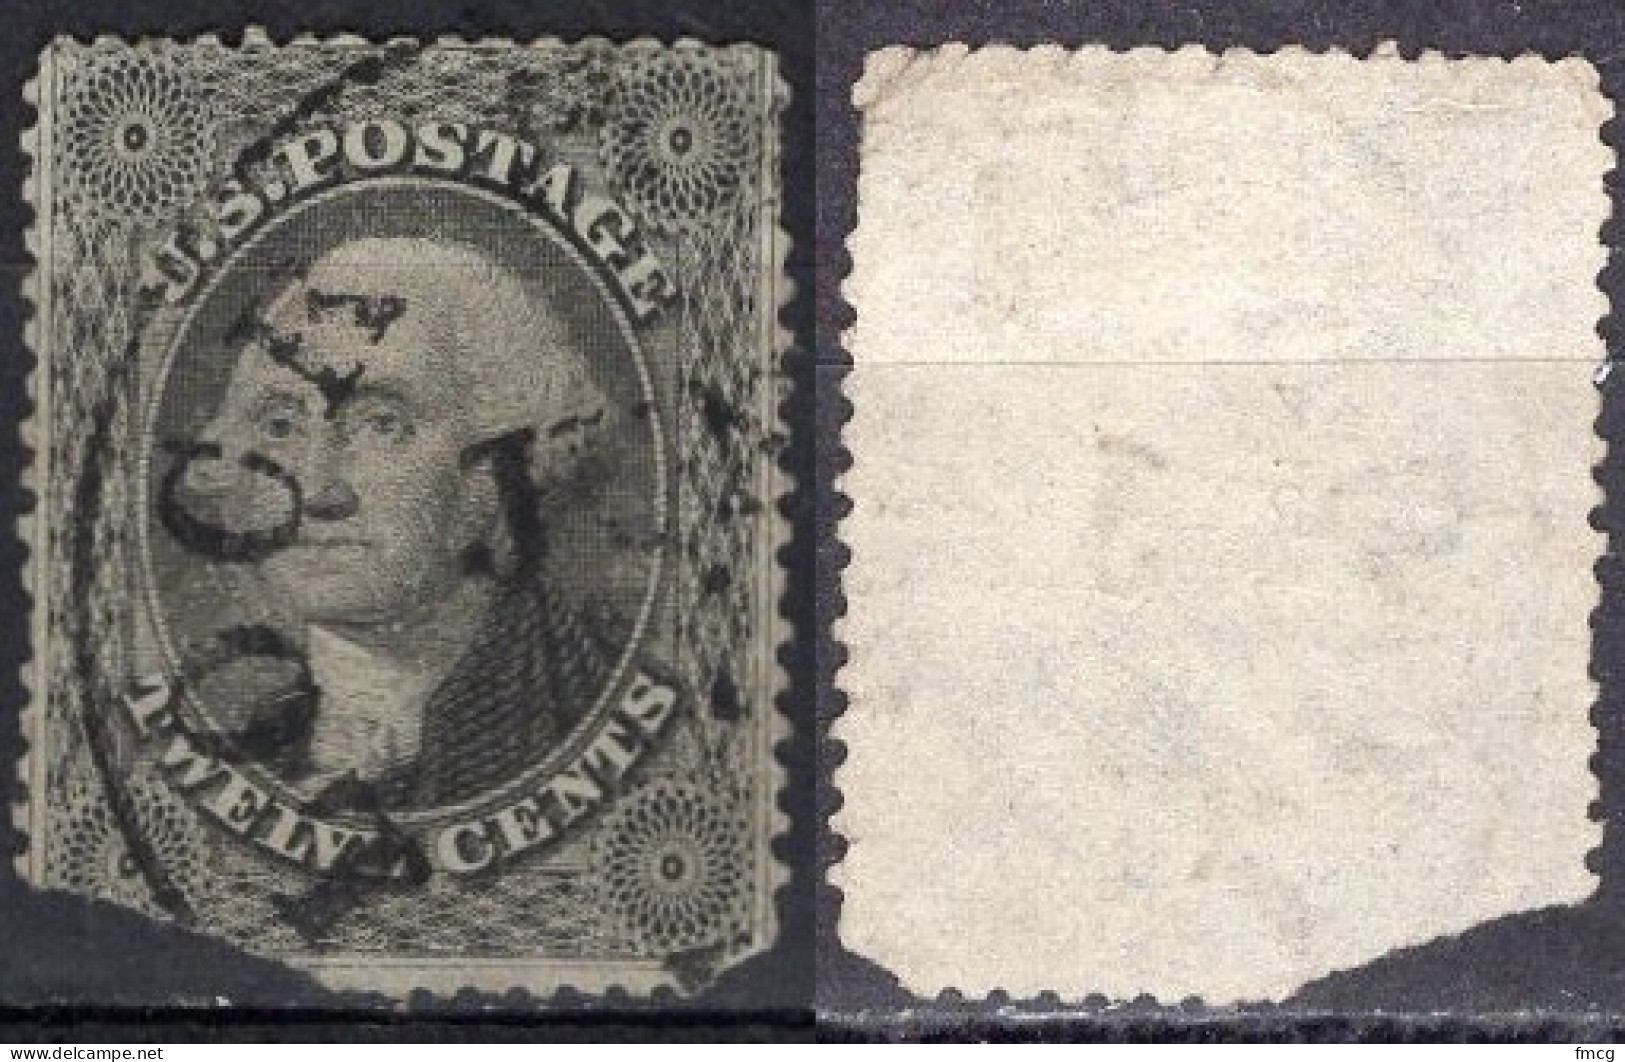 1851 12 Cents George Washington, Used, Space Filler, (Scott #17) - Gebraucht